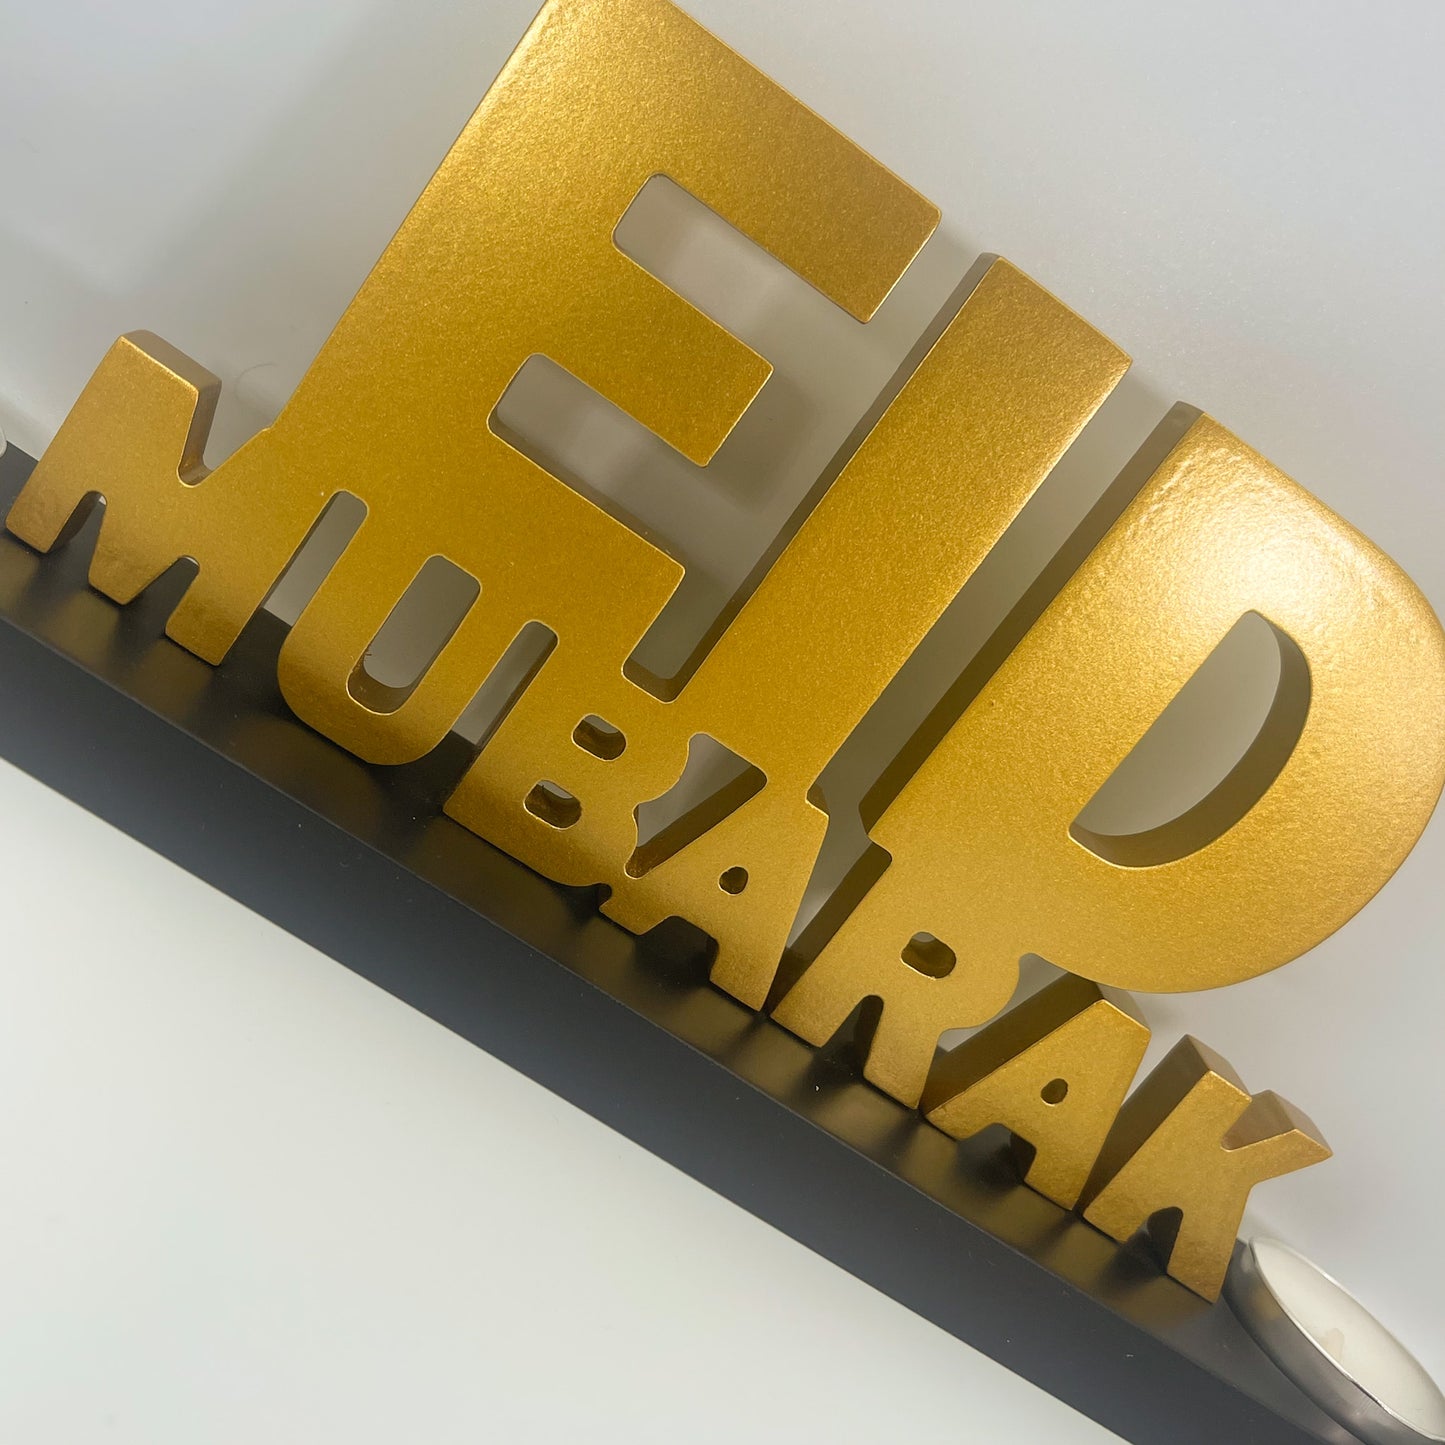 Eid Mubarak Tealight Holder Gift Package